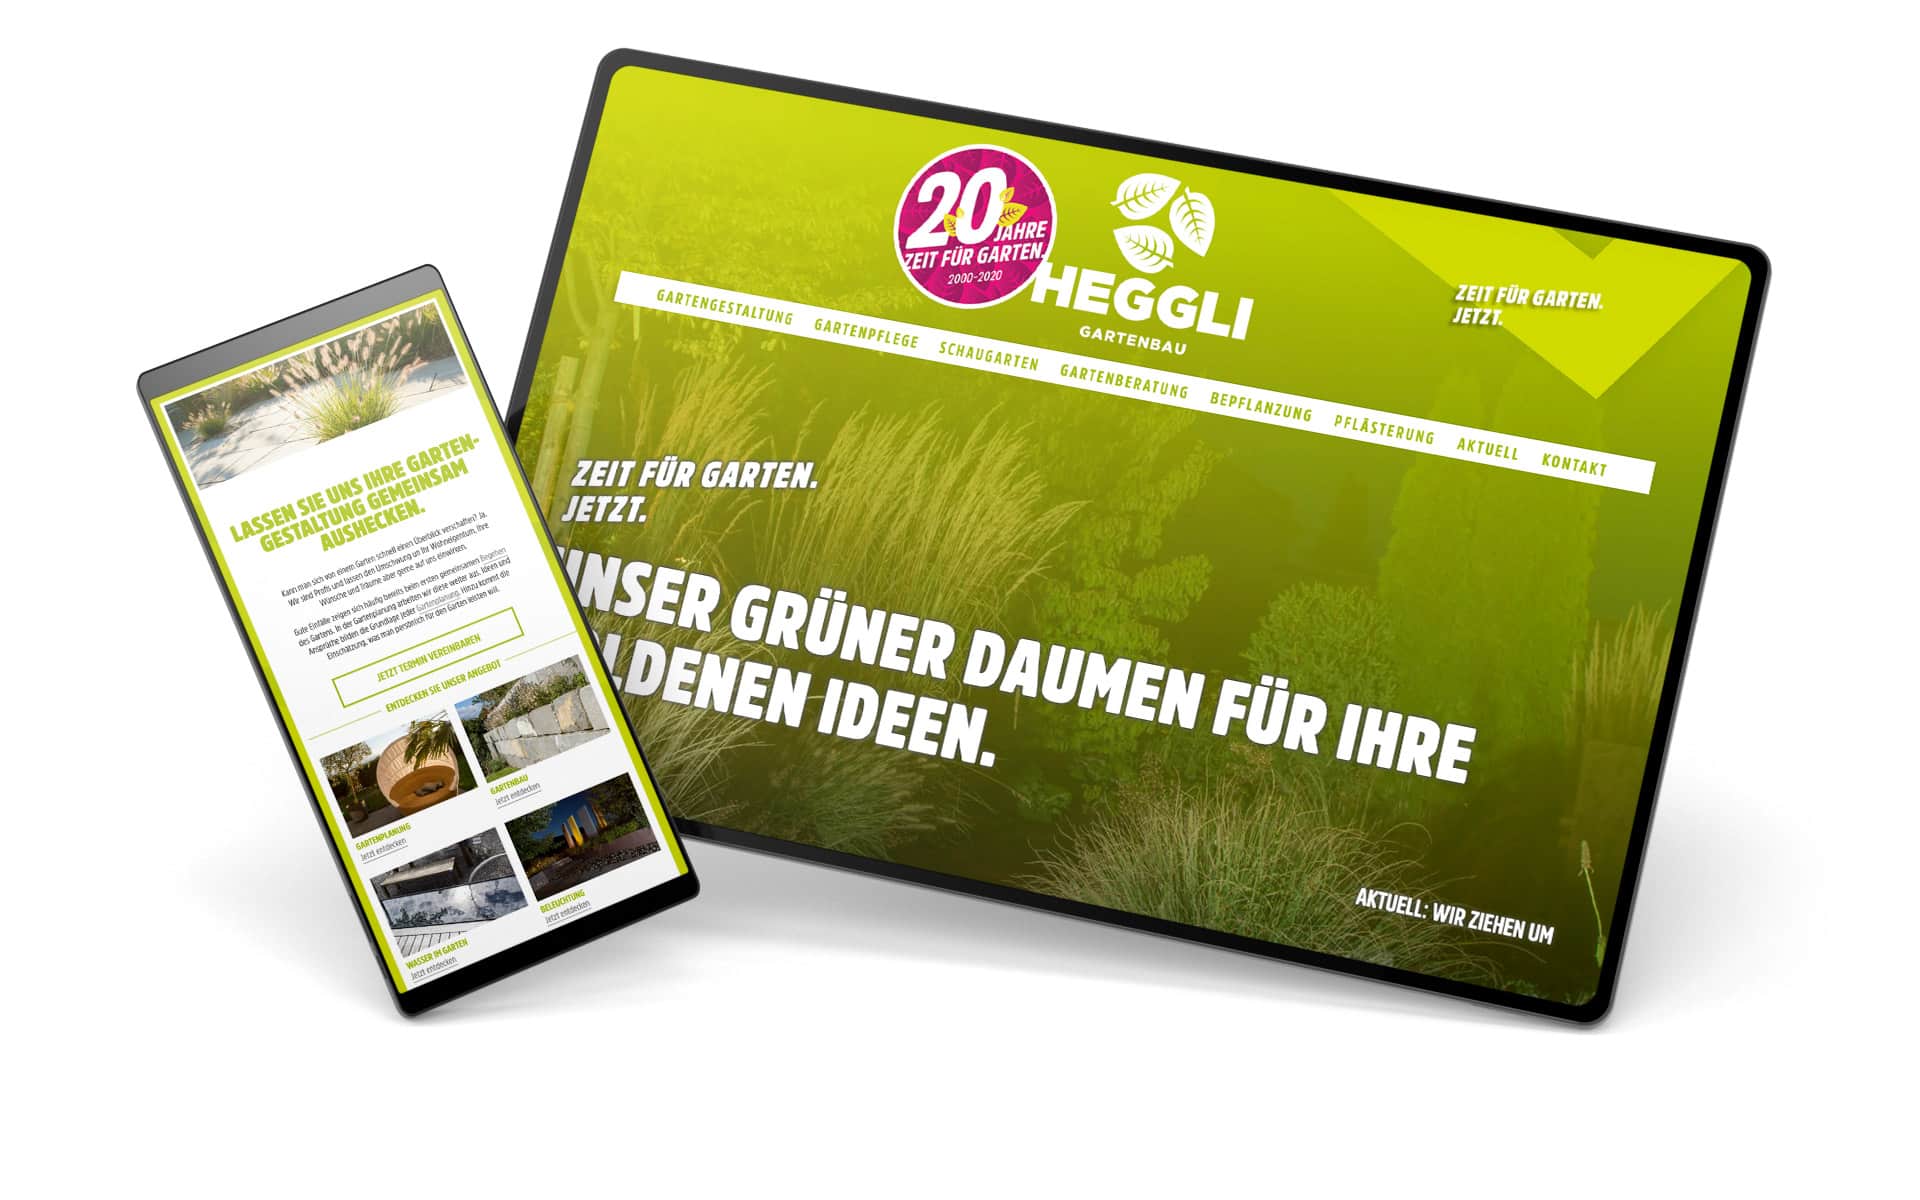 Heggli Gartenbau, SEO optimierte Homepage